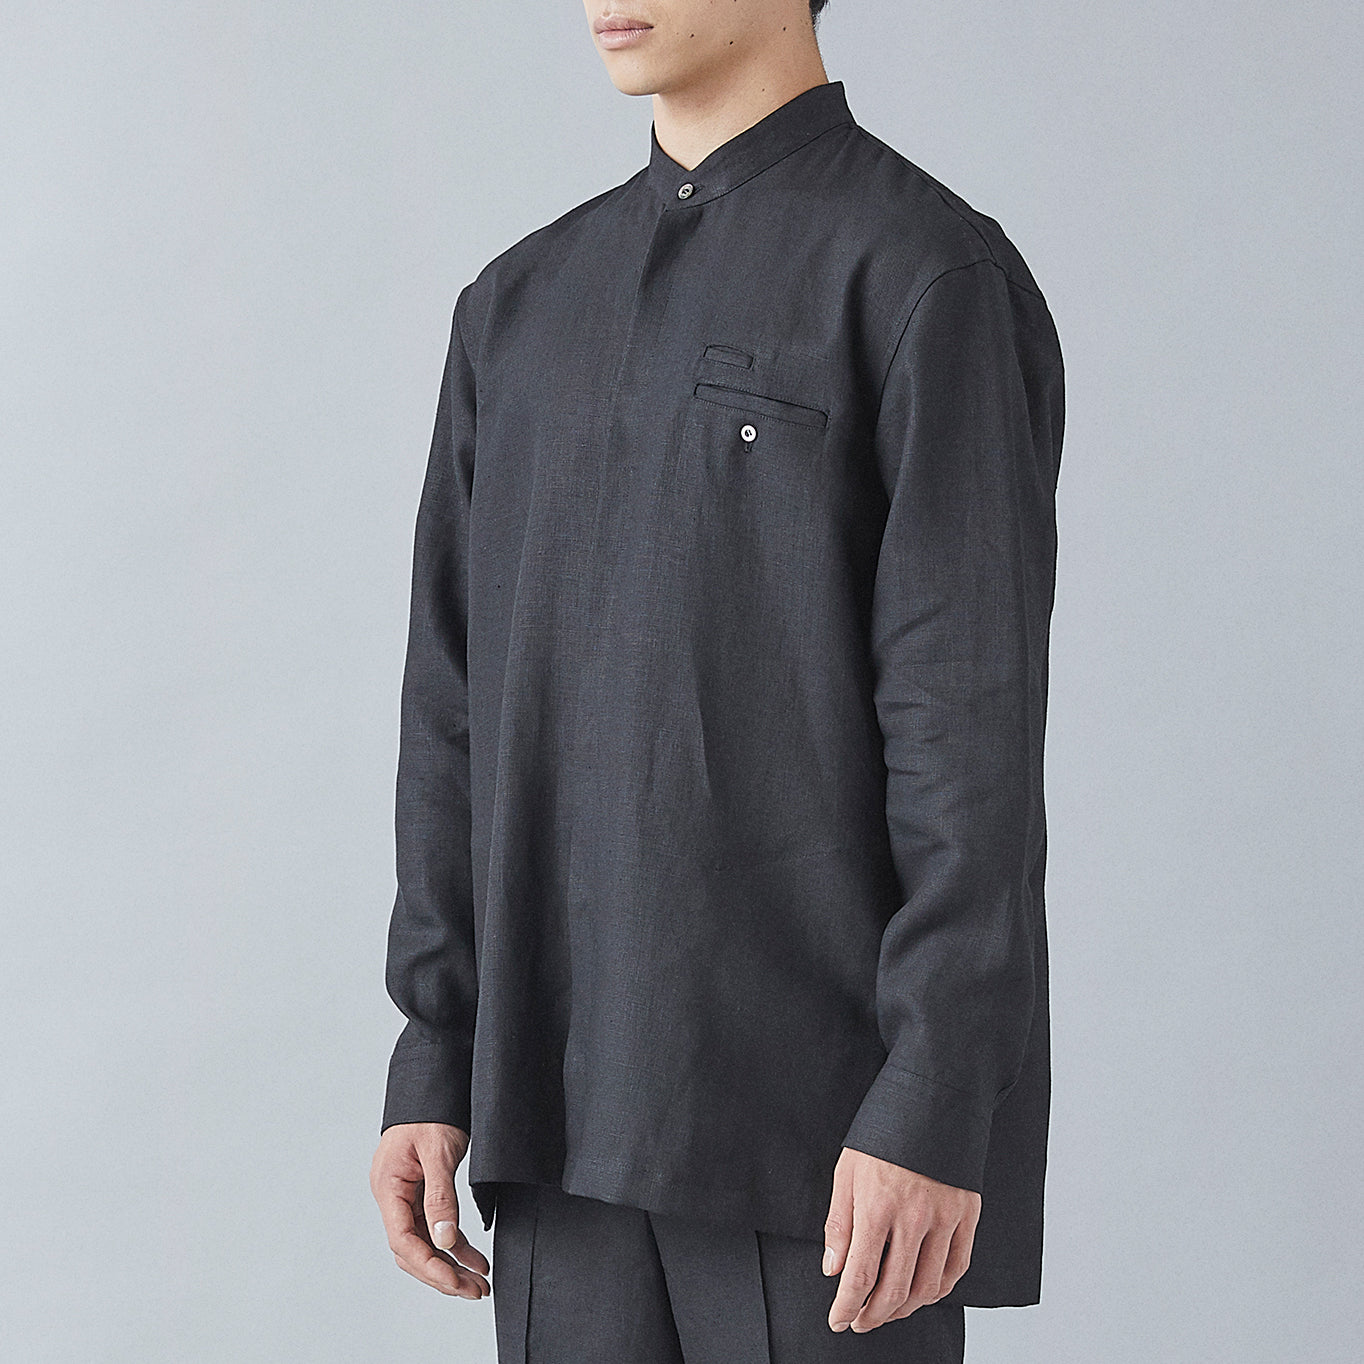 Atelier Mao Collar Shirt (Black)